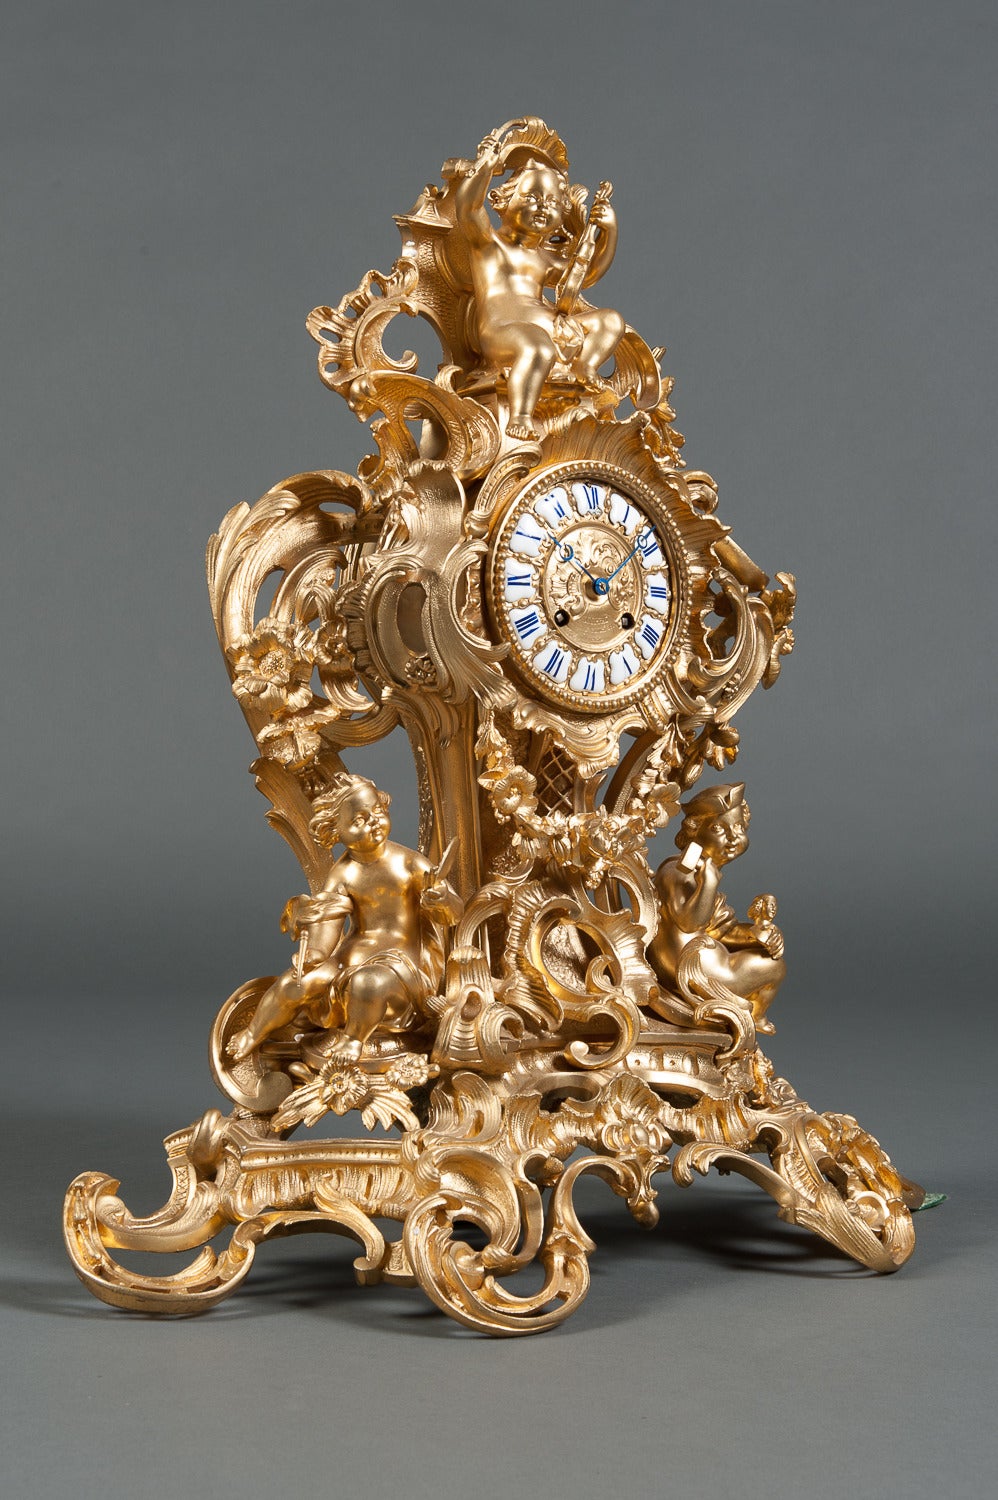 A 19th Century French Gilt Bronze Figural Mantle Clock

Circa 1880

Origin: France

Height: 24